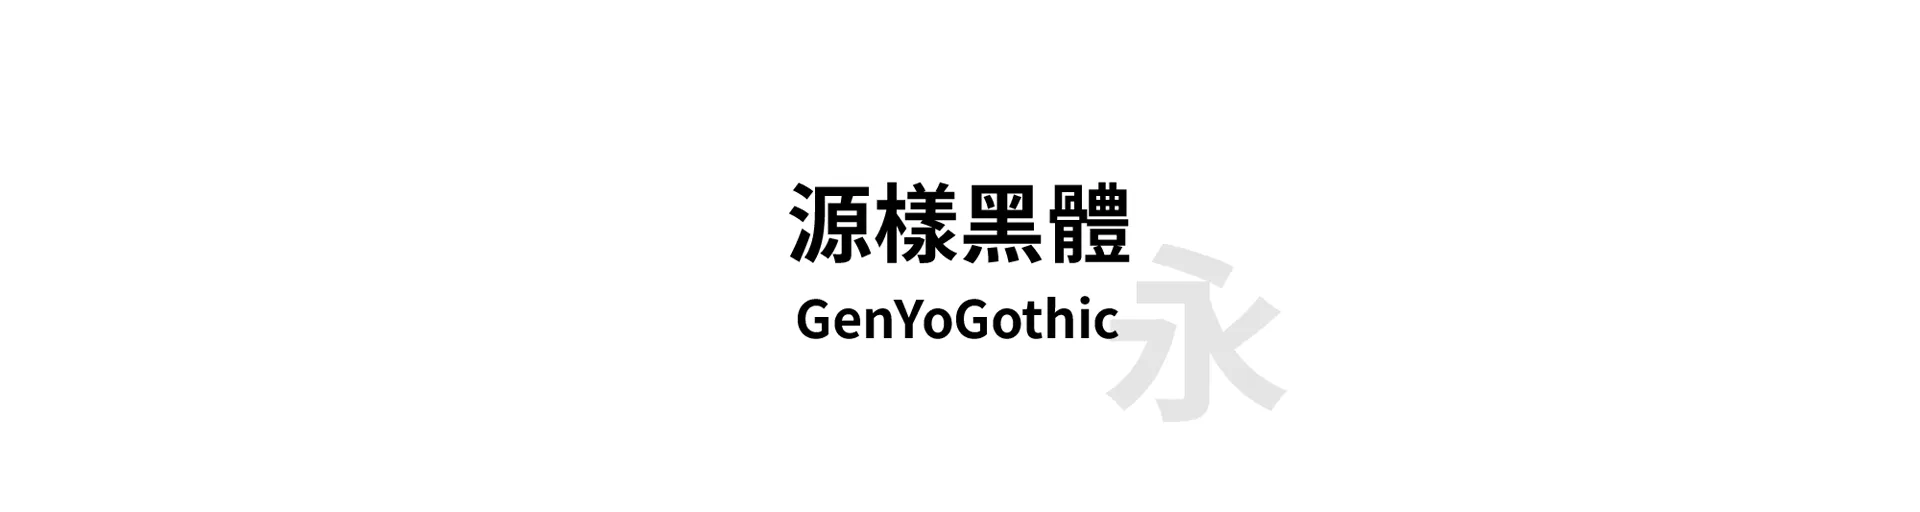 GenYoGothic